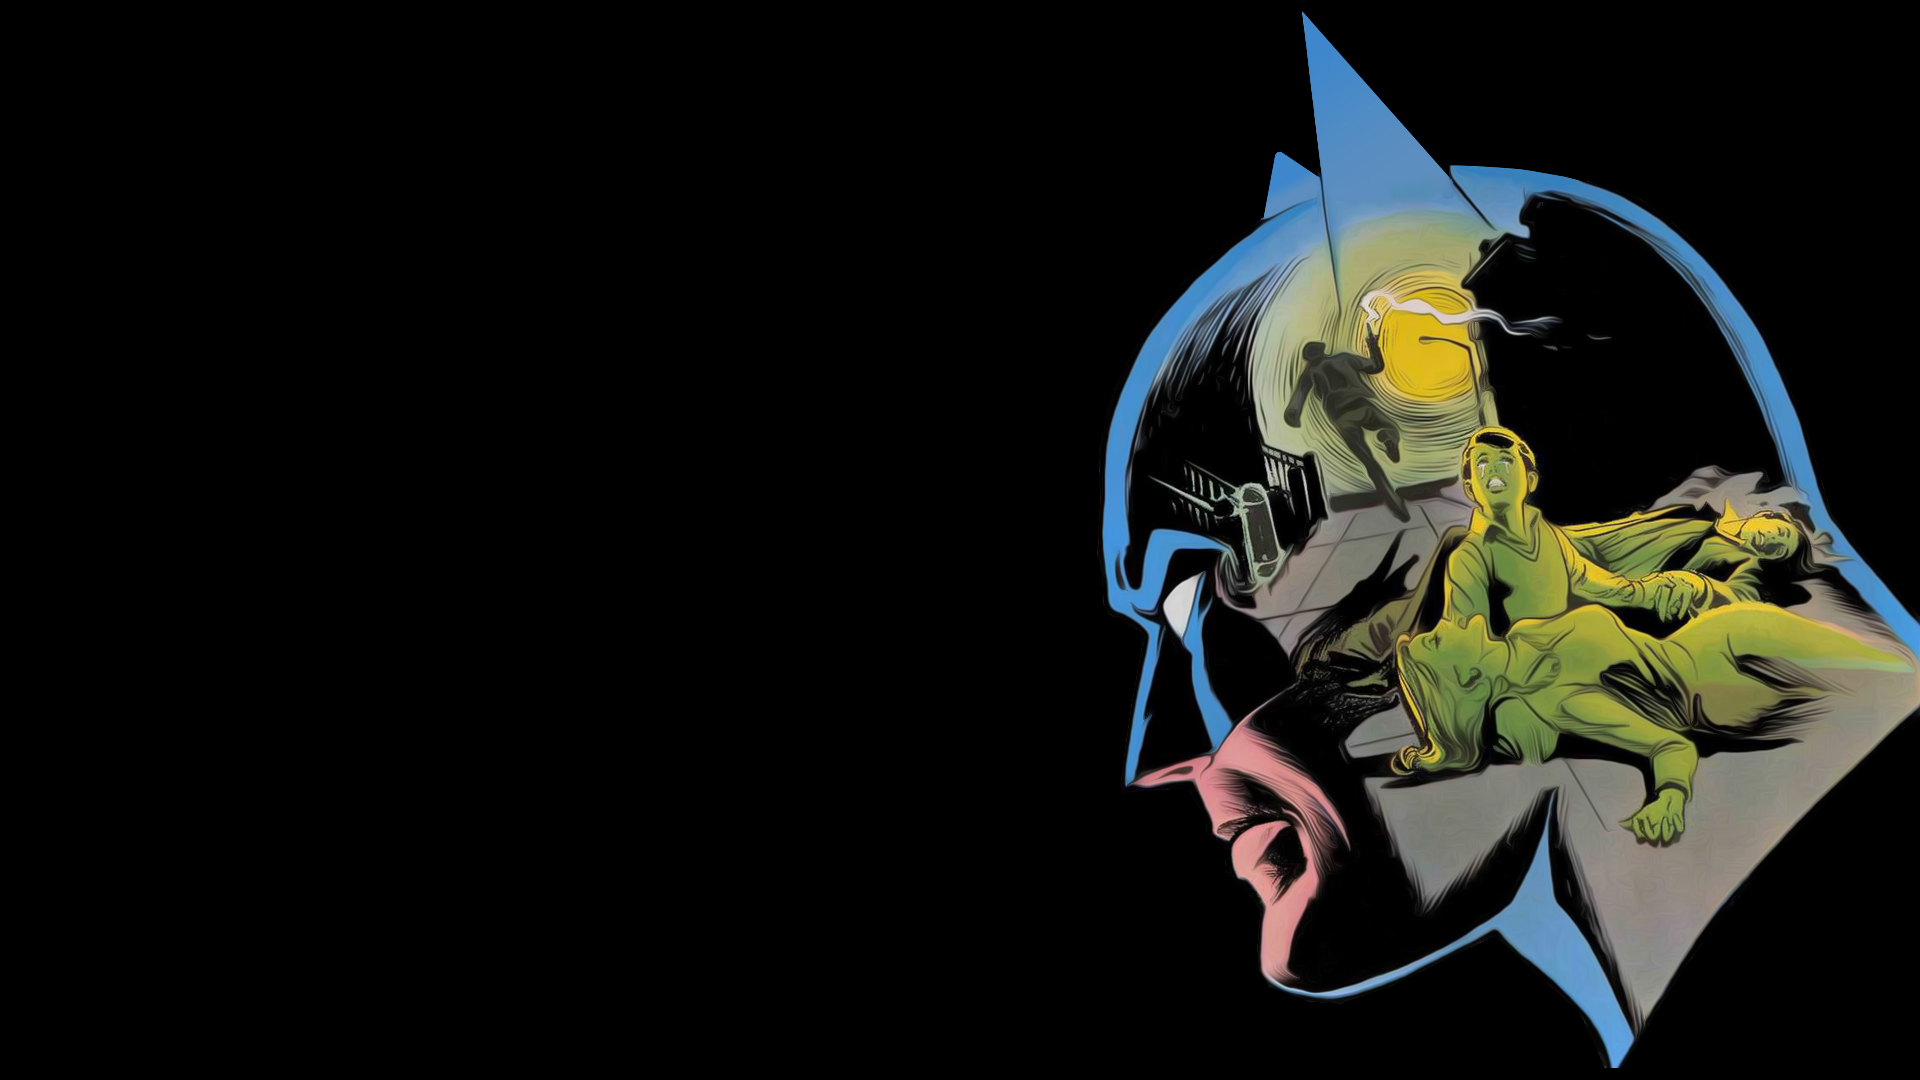 Explore The Collection Batman Ics